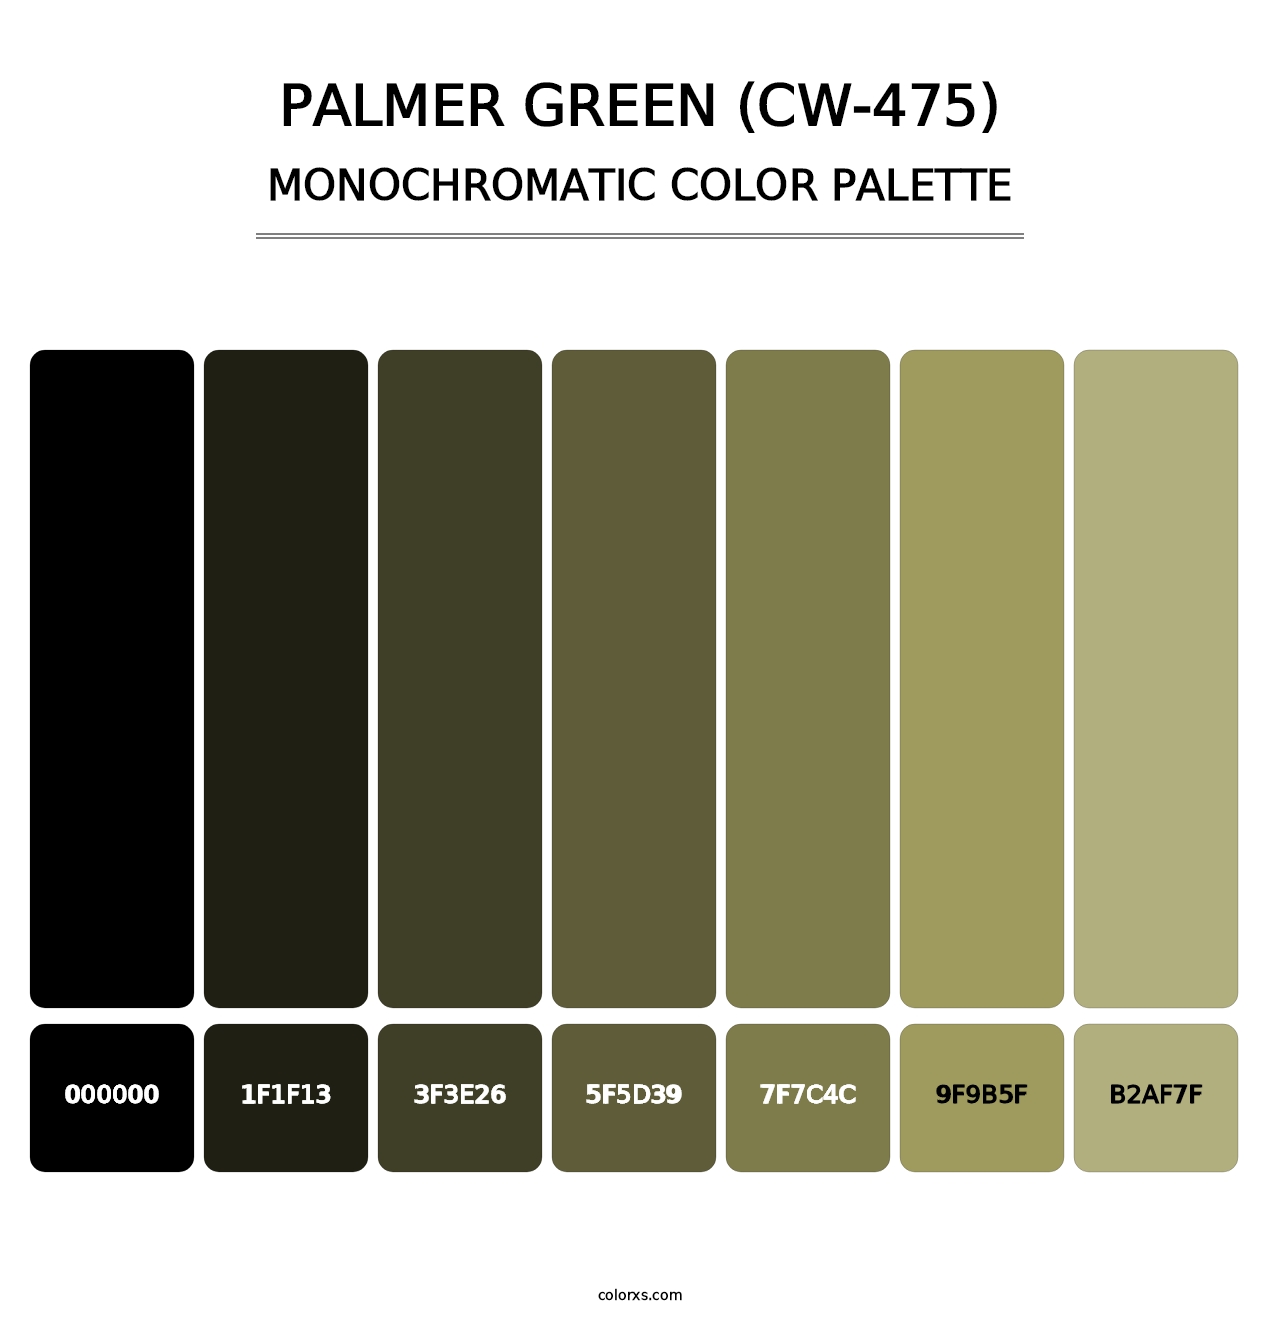 Palmer Green (CW-475) - Monochromatic Color Palette